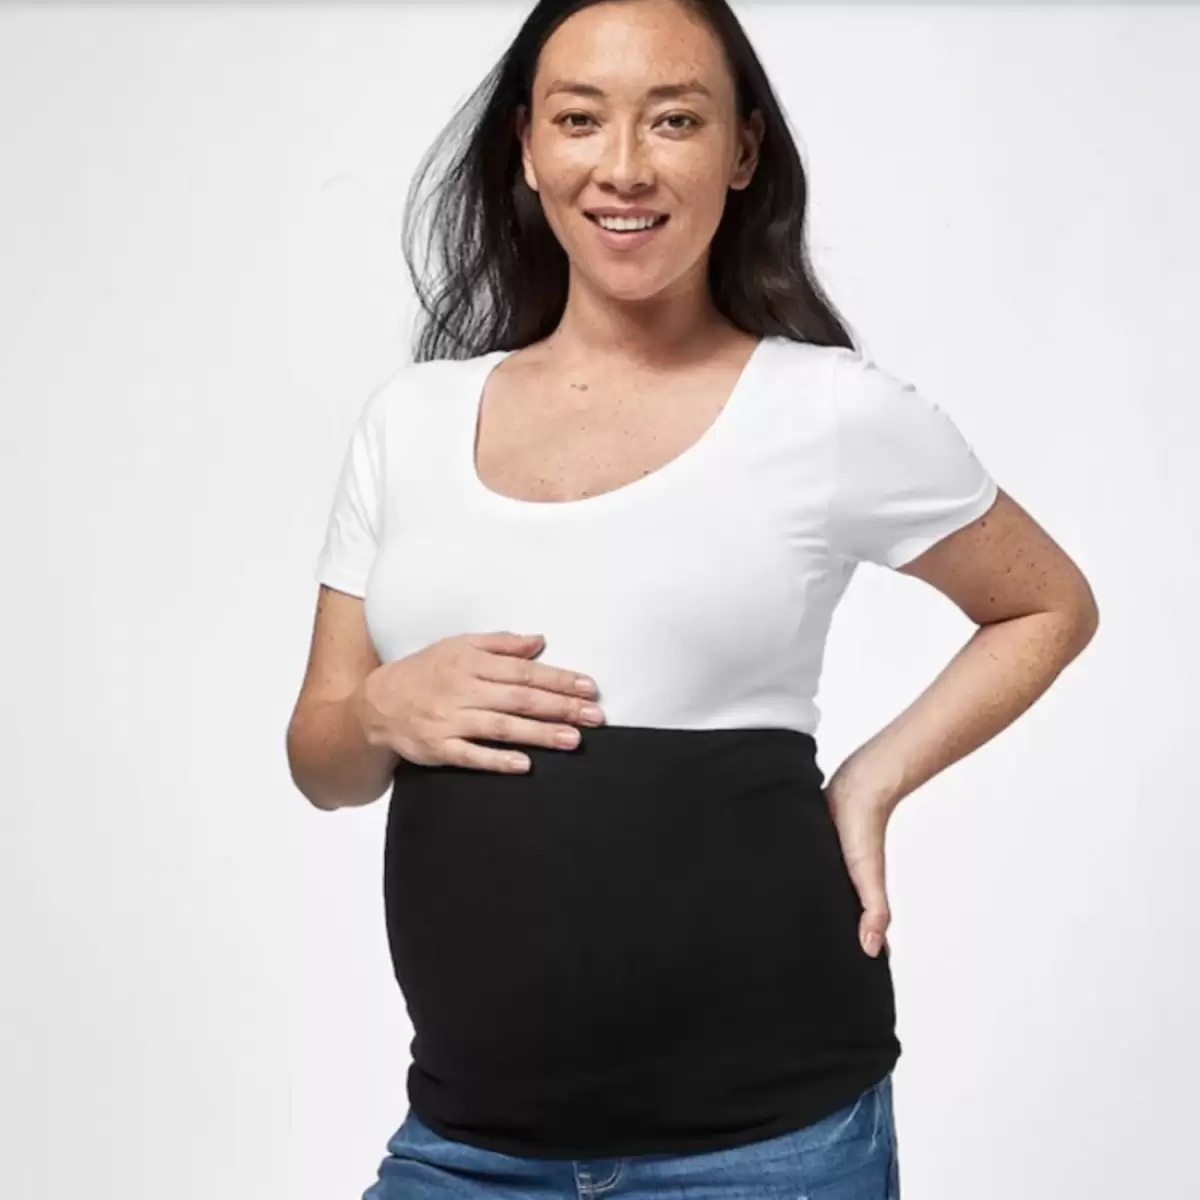 Post-pregnancy Original Belly Wrap - Belly Bandit : Target